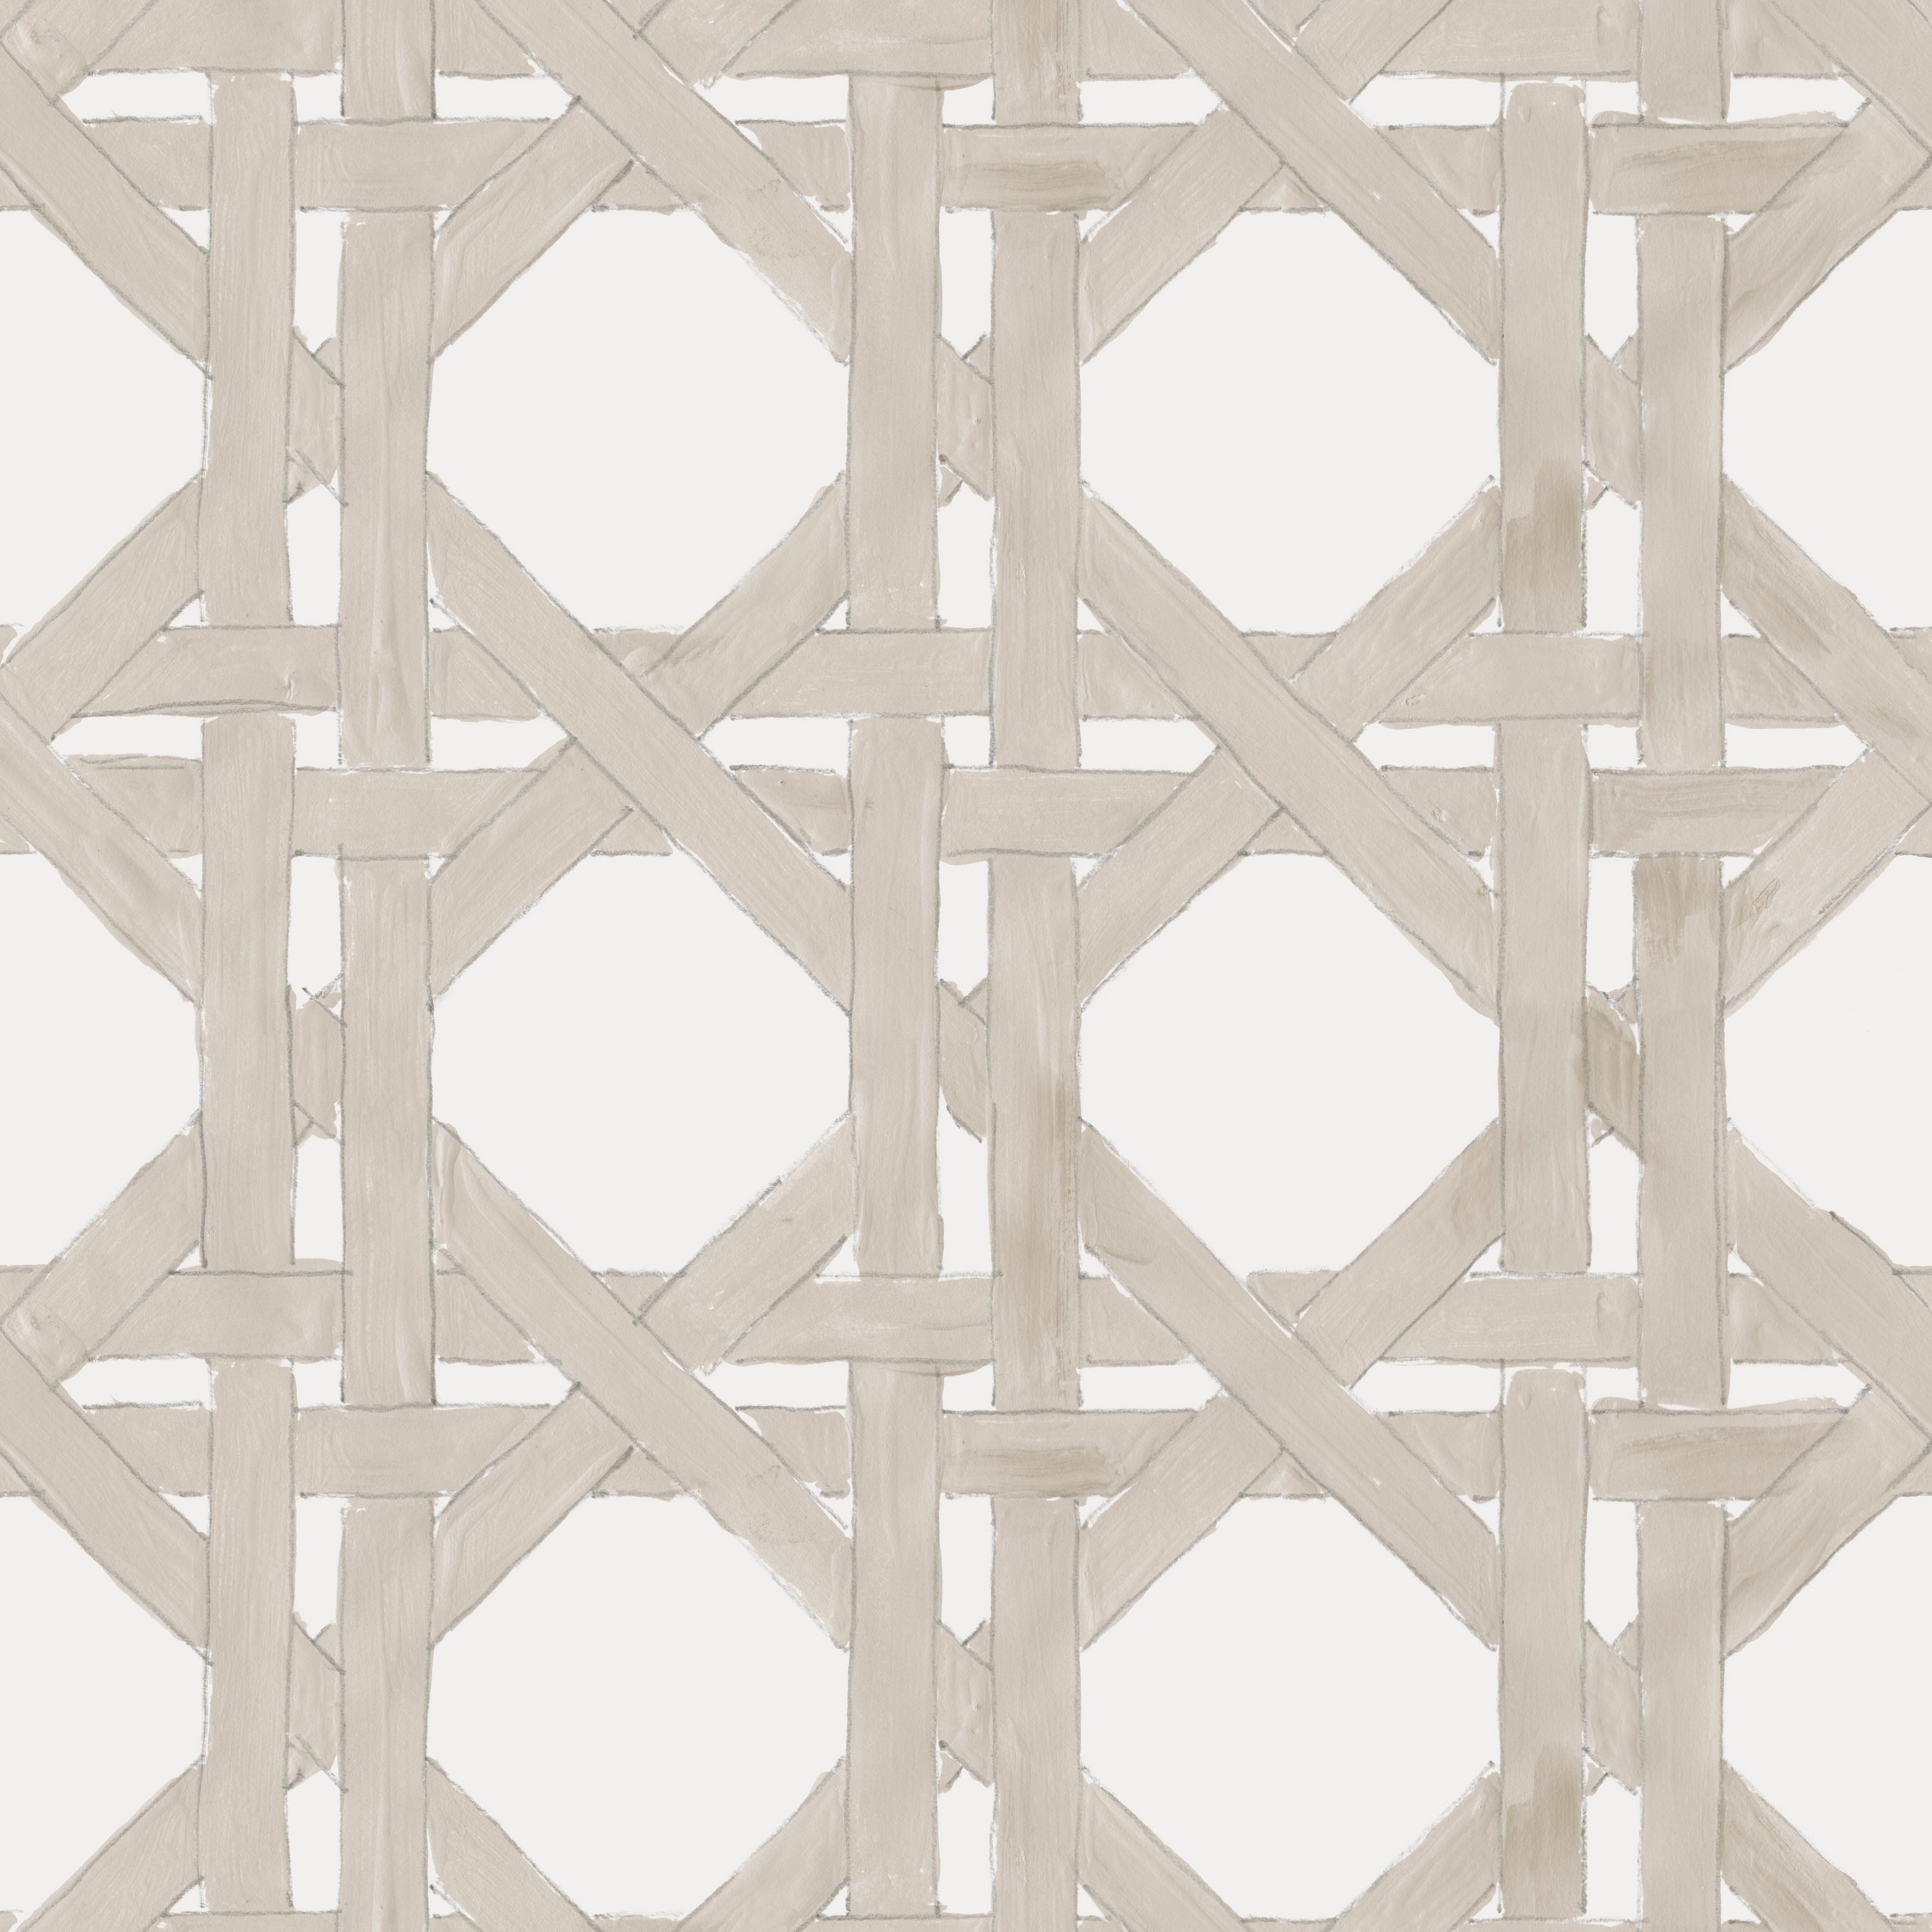 Detail of wallpaper in a geometric lattice print in tan on a white field.